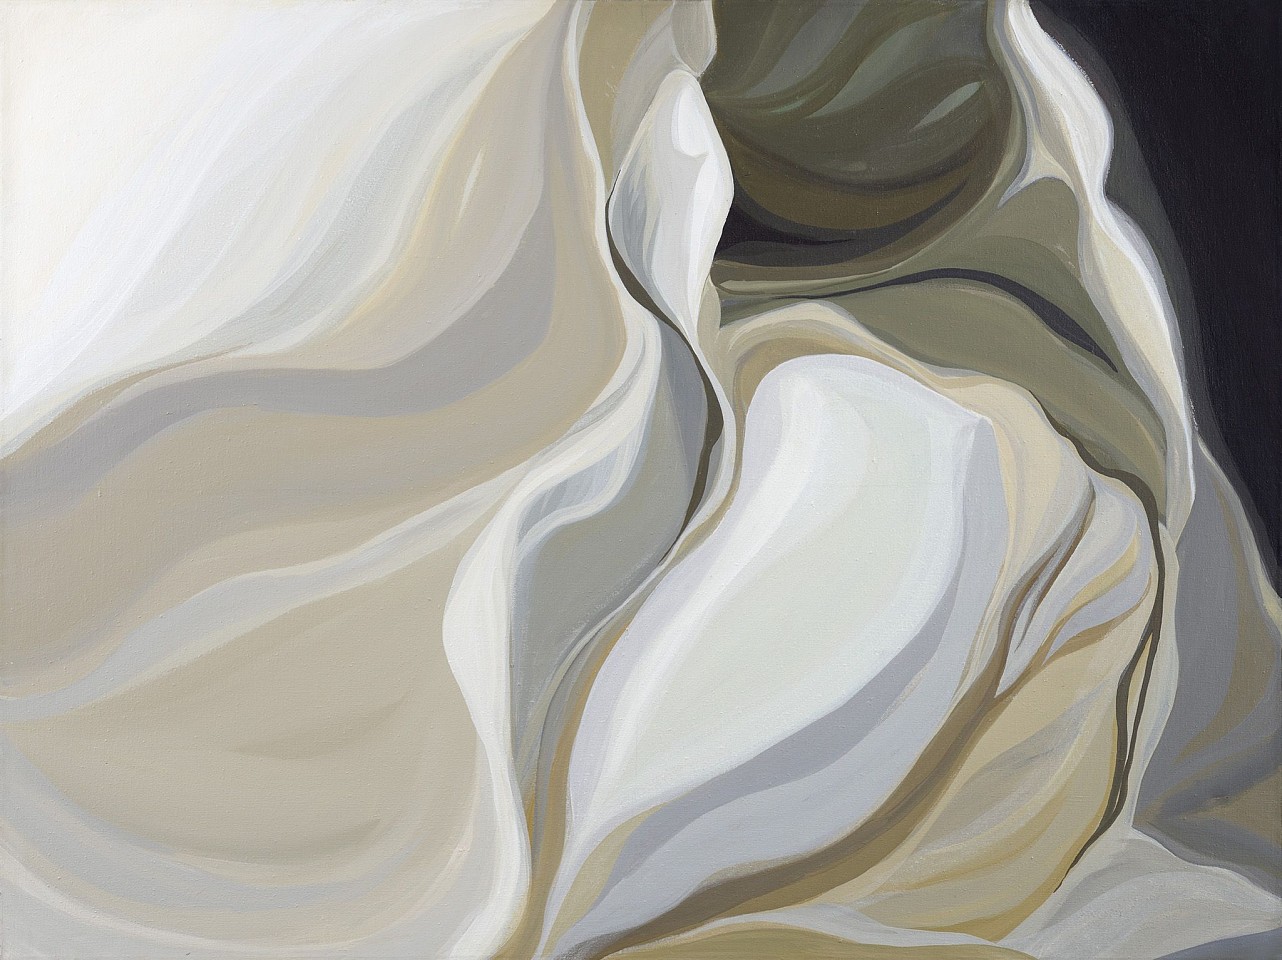 Lilian Thomas Burwell, Arctic Flow | SOLD, 1983
Acrylic on linen, 36 x 48 in. (91.4 x 121.9 cm)
BUR-00009